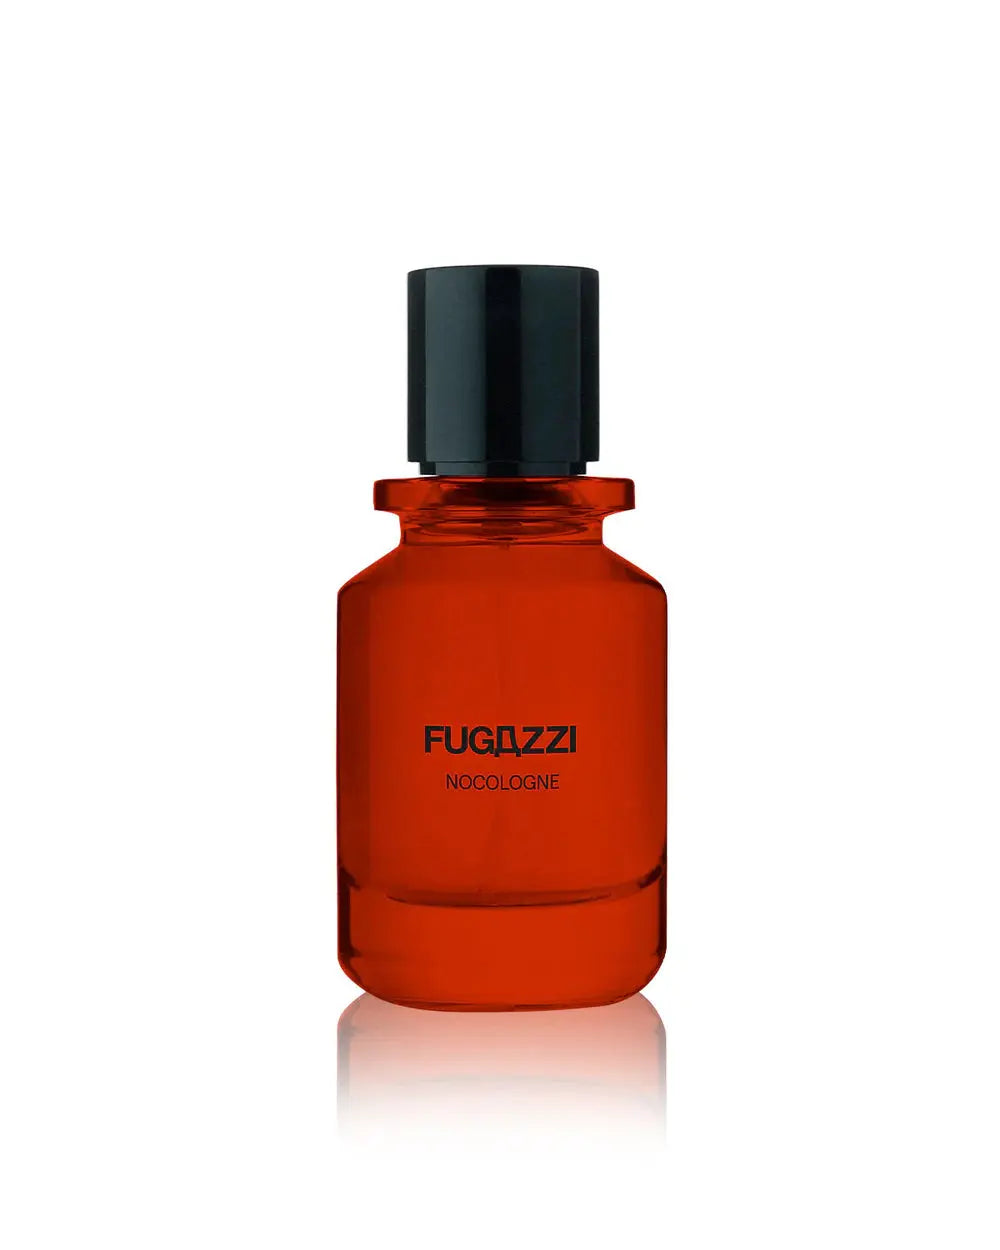 Extracto de perfume Nocologne Fugazzi - 50 ml